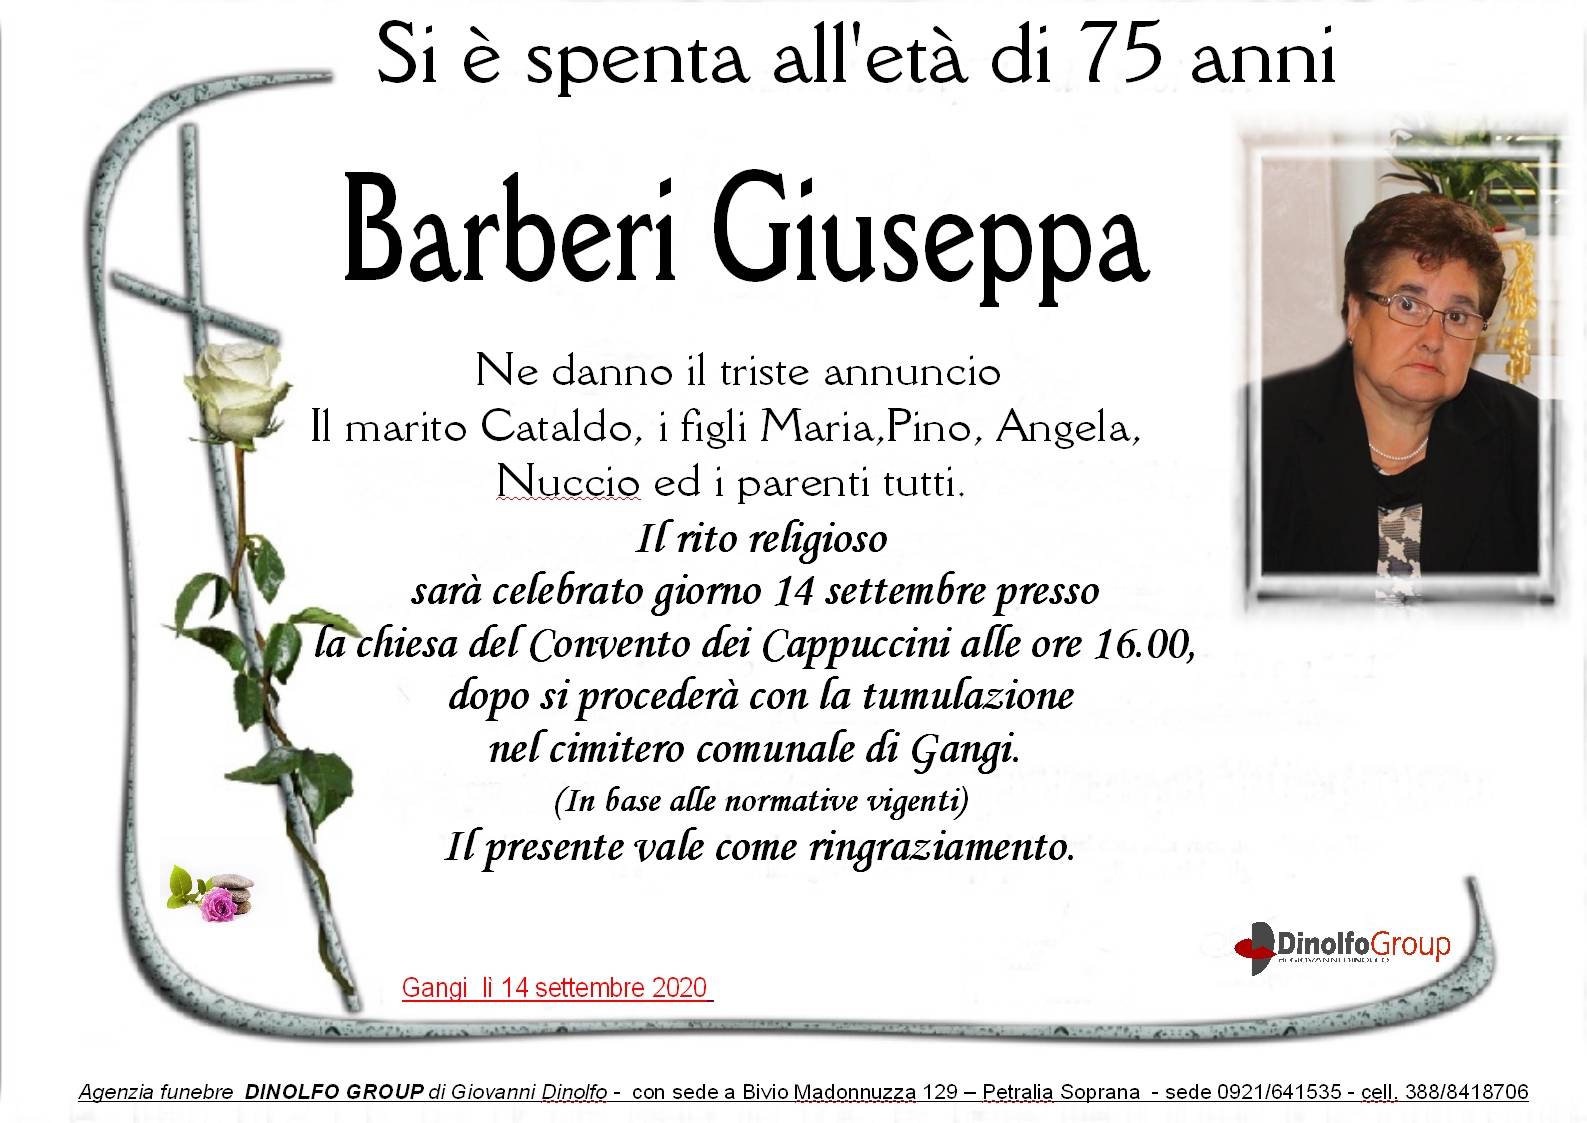 Giuseppa Barberi